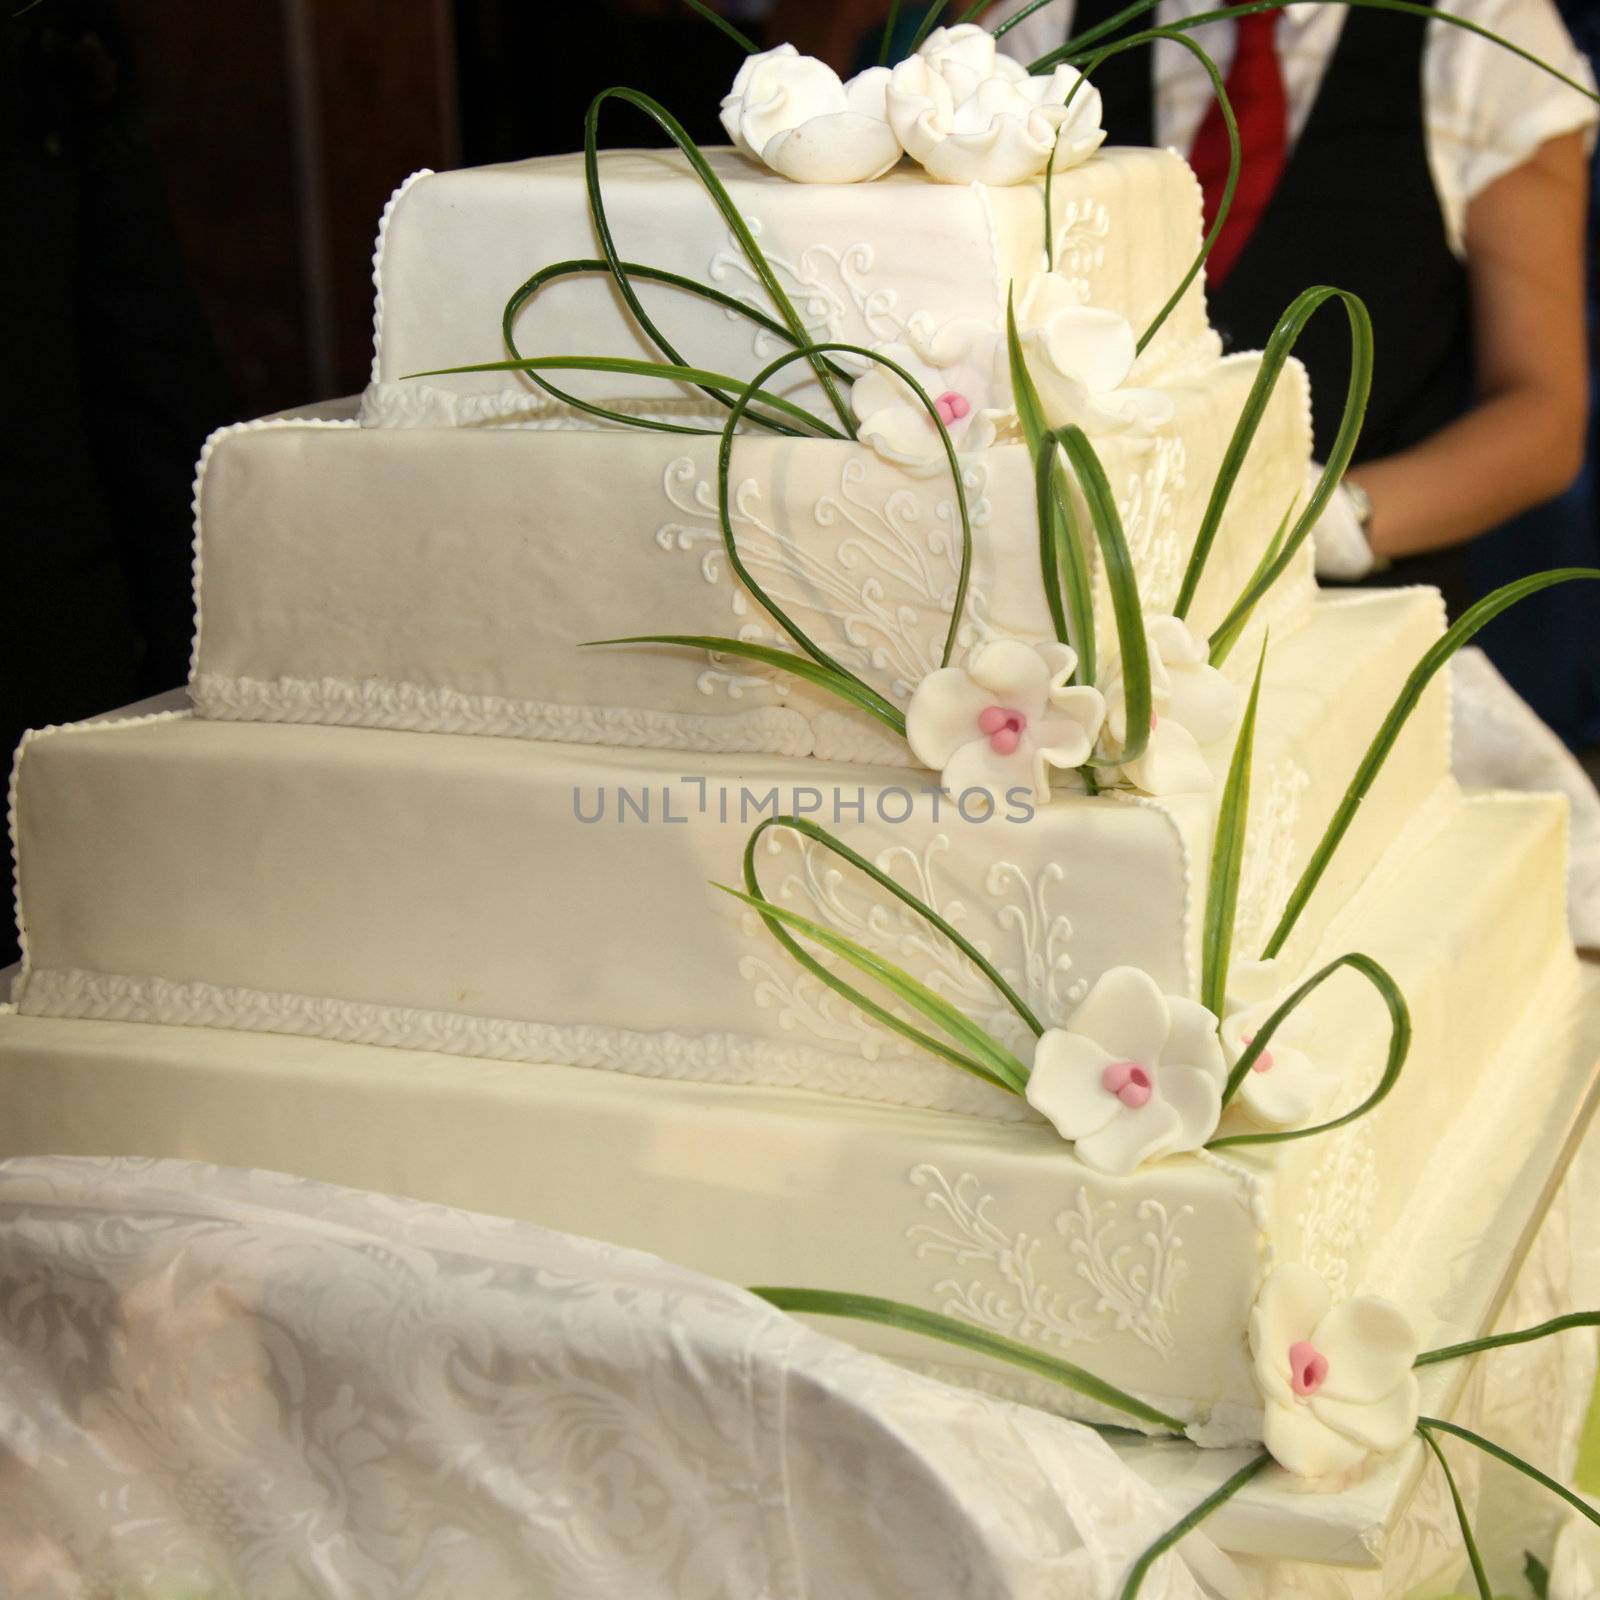 Huge wedding cake or birthday cake - English style by Farina6000